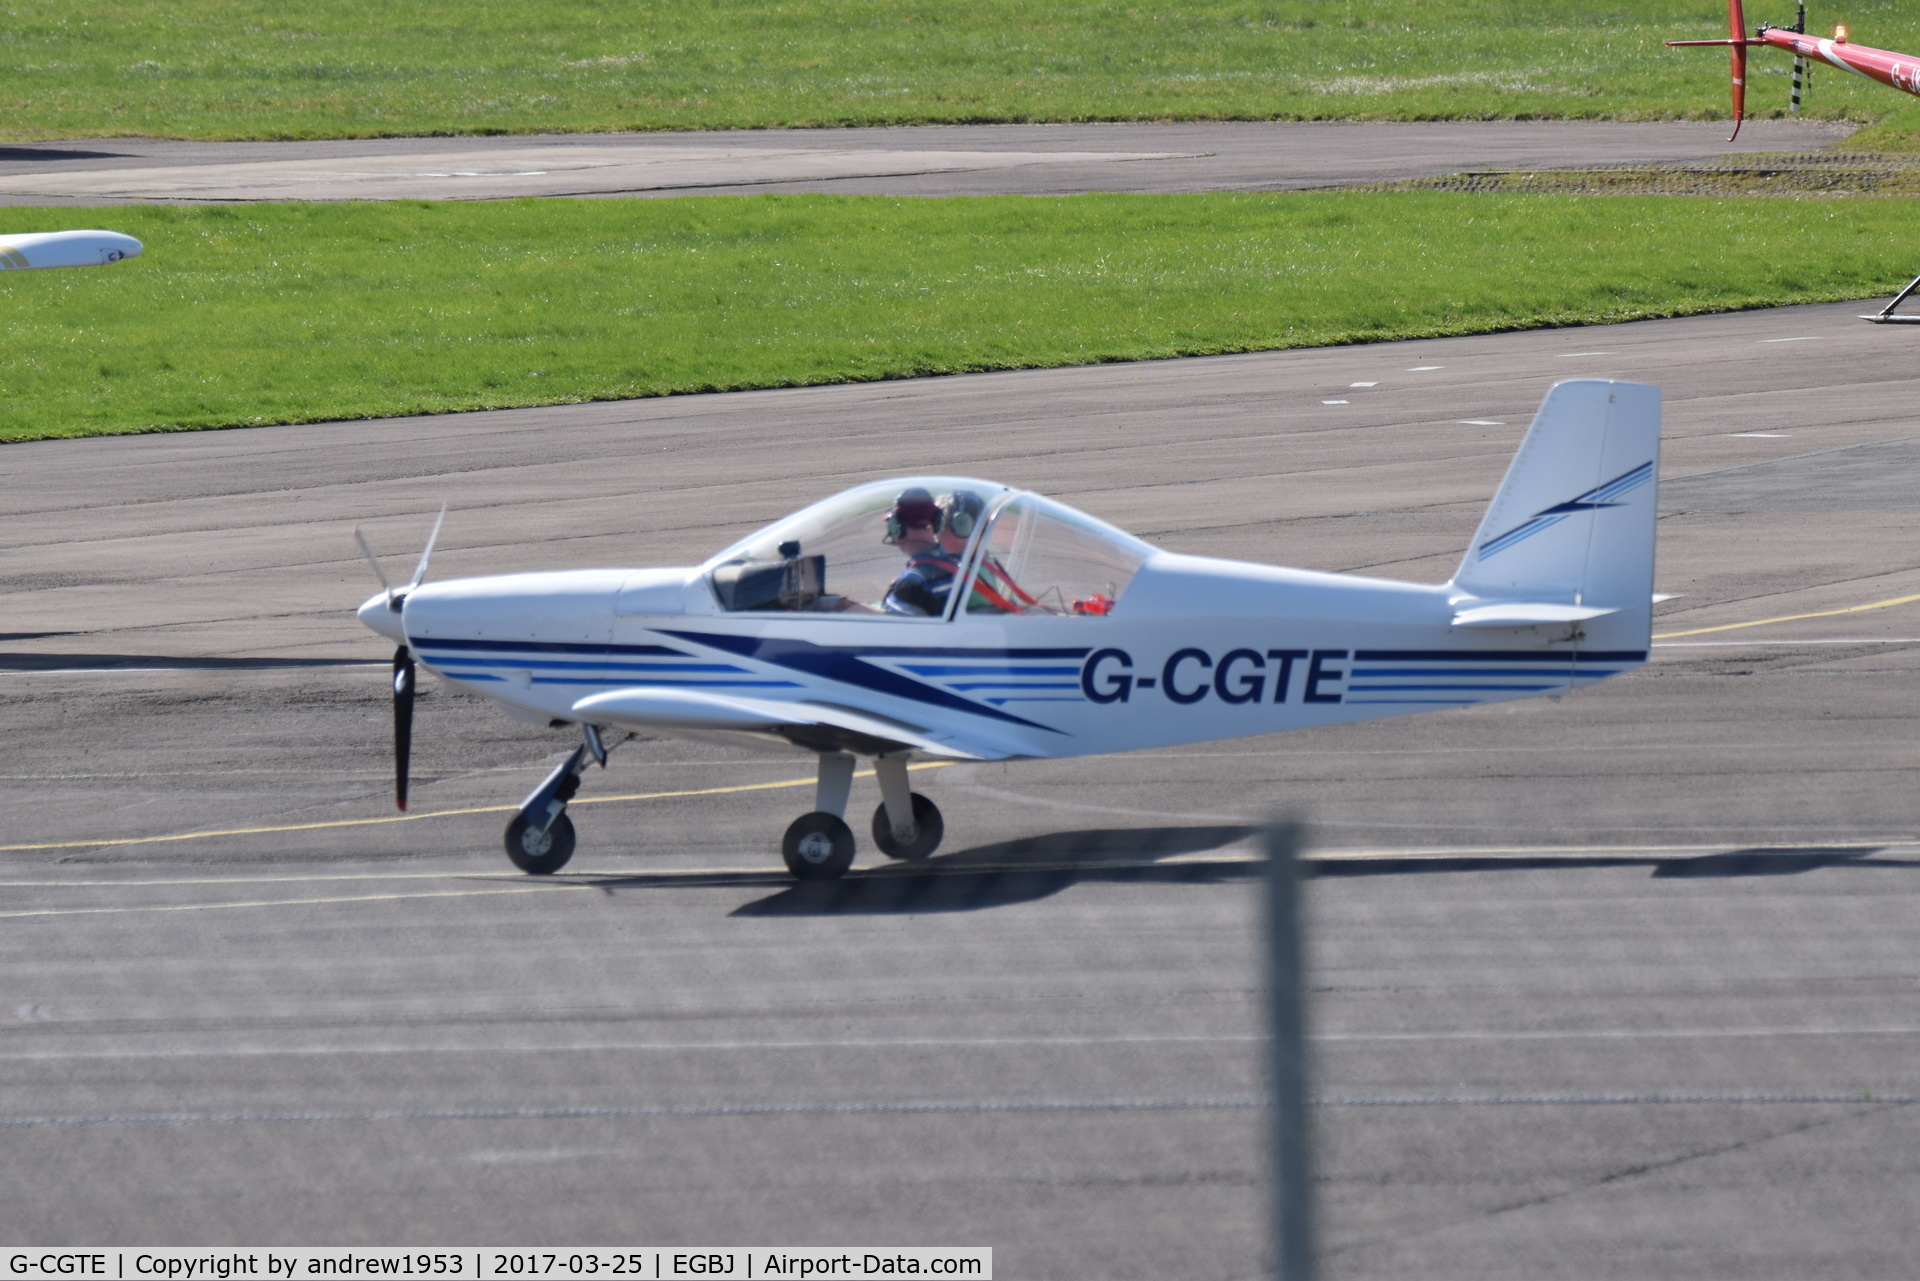 G-CGTE, 2011 Brandli BX-2 Cherry C/N PFA 179-13386, G-CGTE at Gloucestershire Airport.